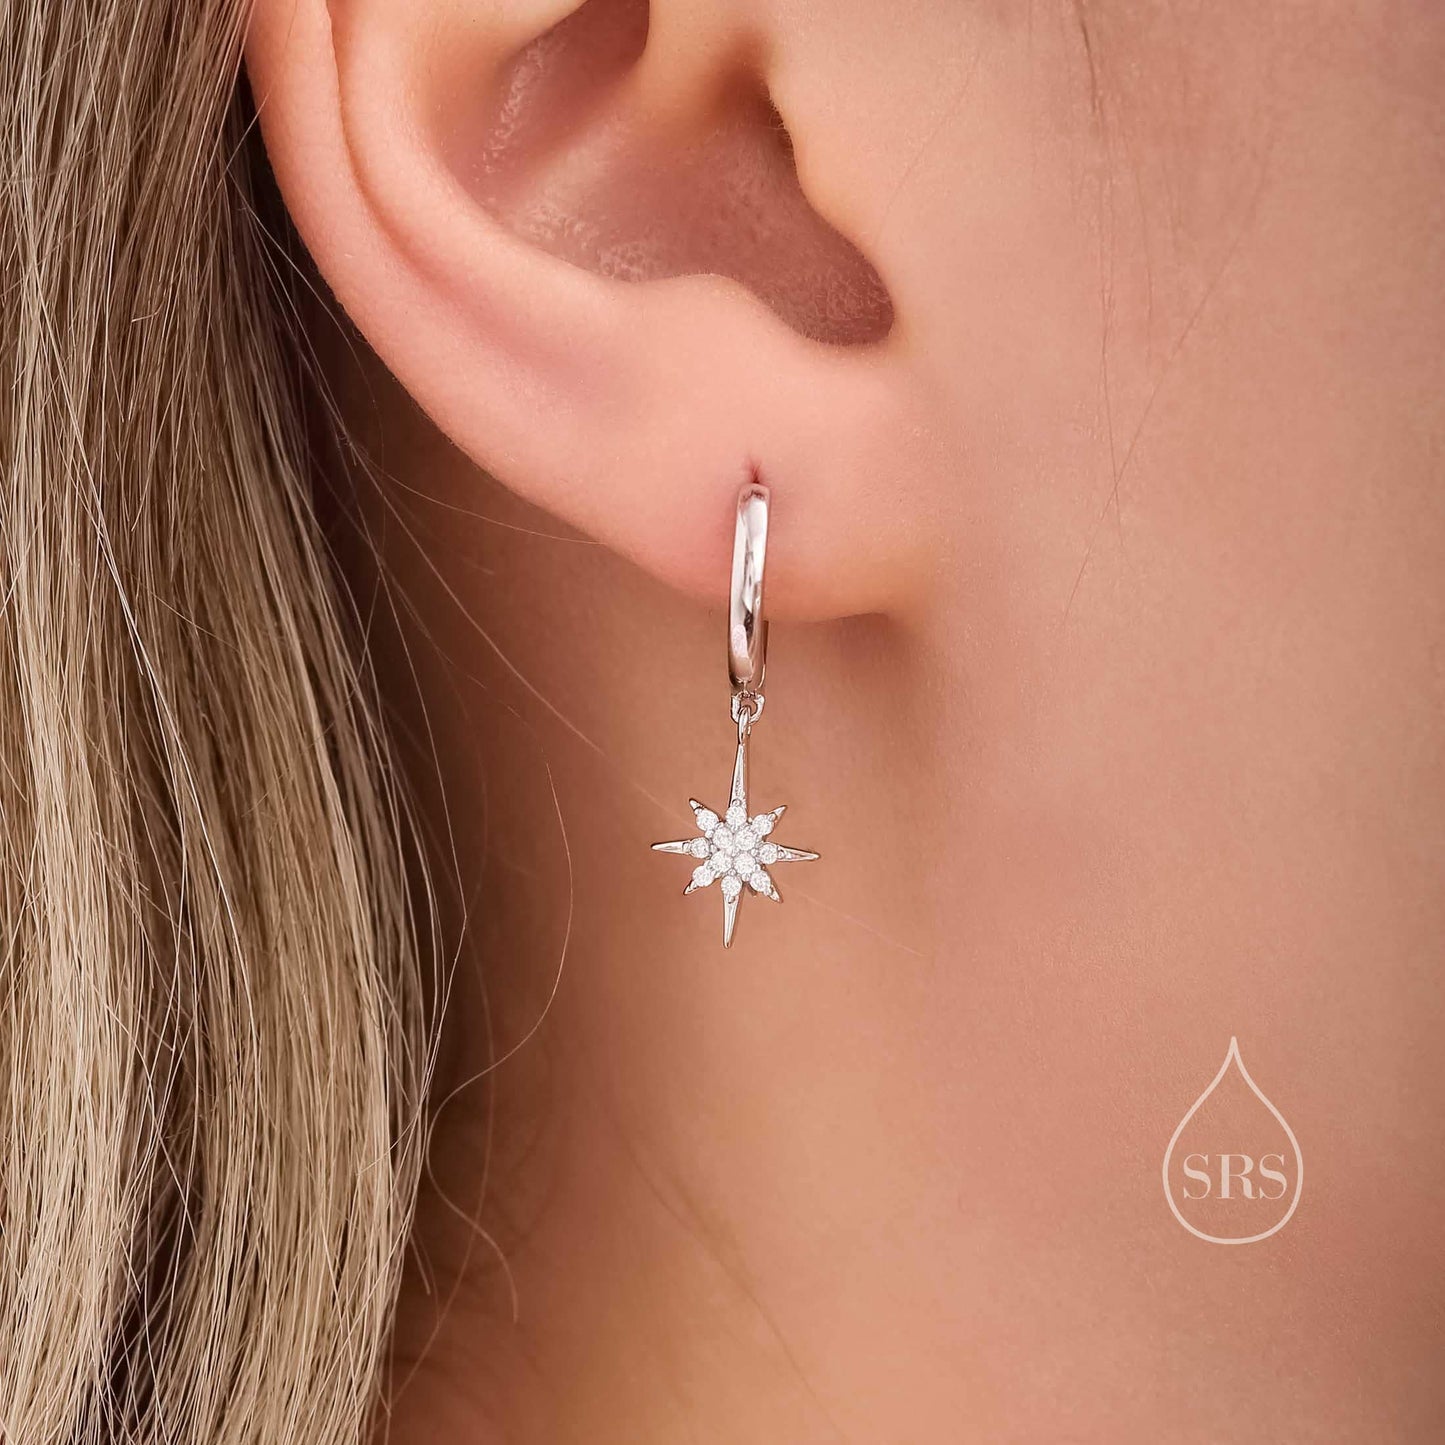 Starburst Huggie Hoop Earrings in Sterling Silver with Dangling Star Burst Charms, Celestial Geometric Design